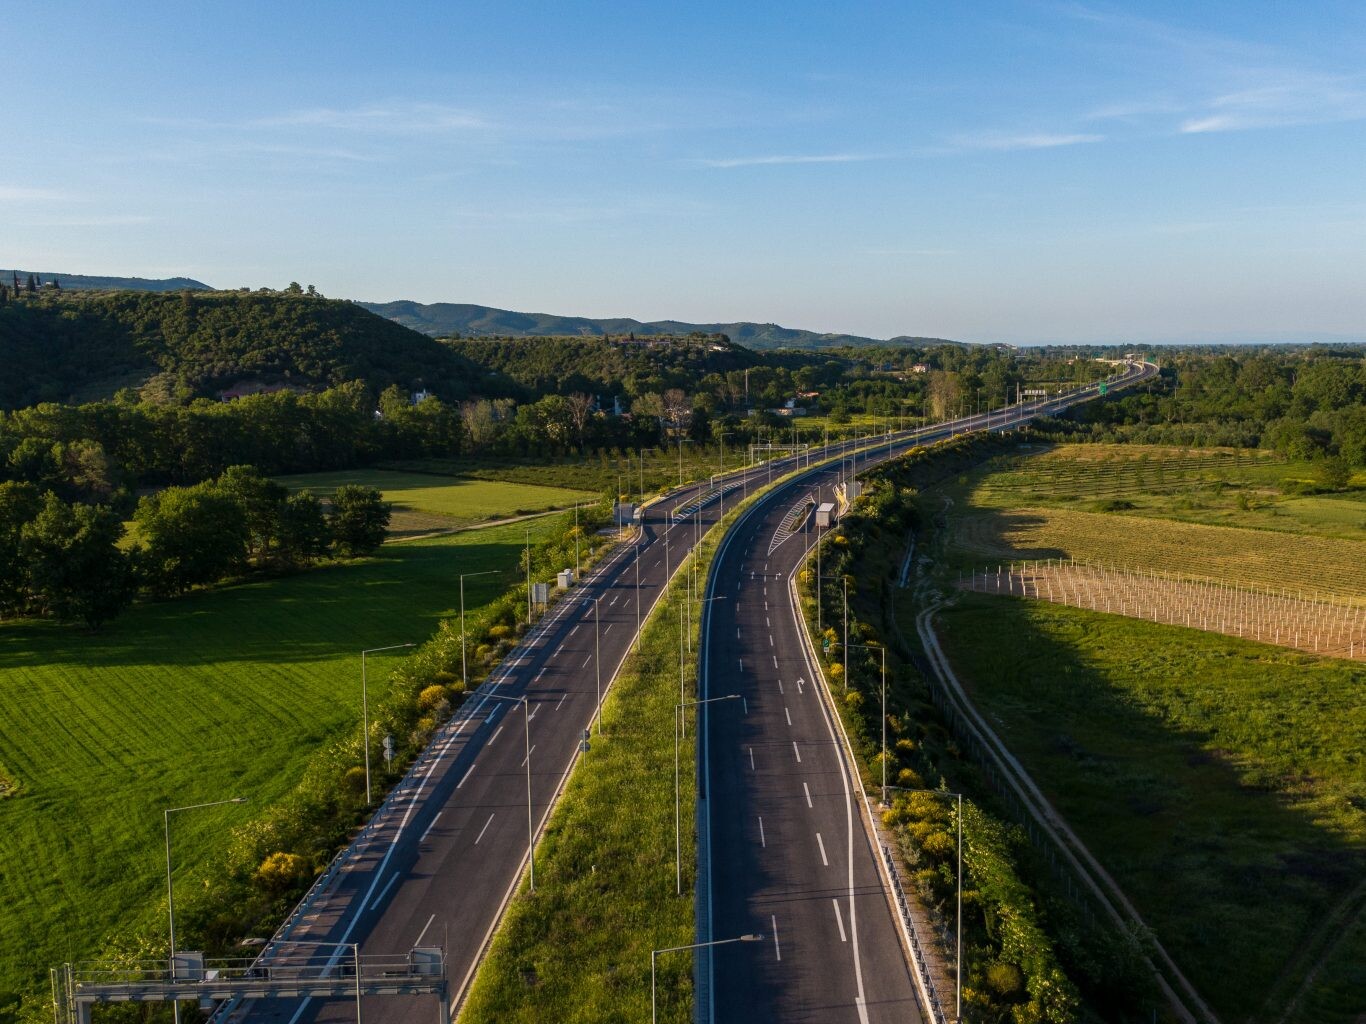 More information about "Αυτοκινητόδρομος Αιγαίου: Ο πρώτος αυτοκινητόδρομος στην Ελλάδα με 100% χρήση φωτιστικών τεχνολογίας LED"